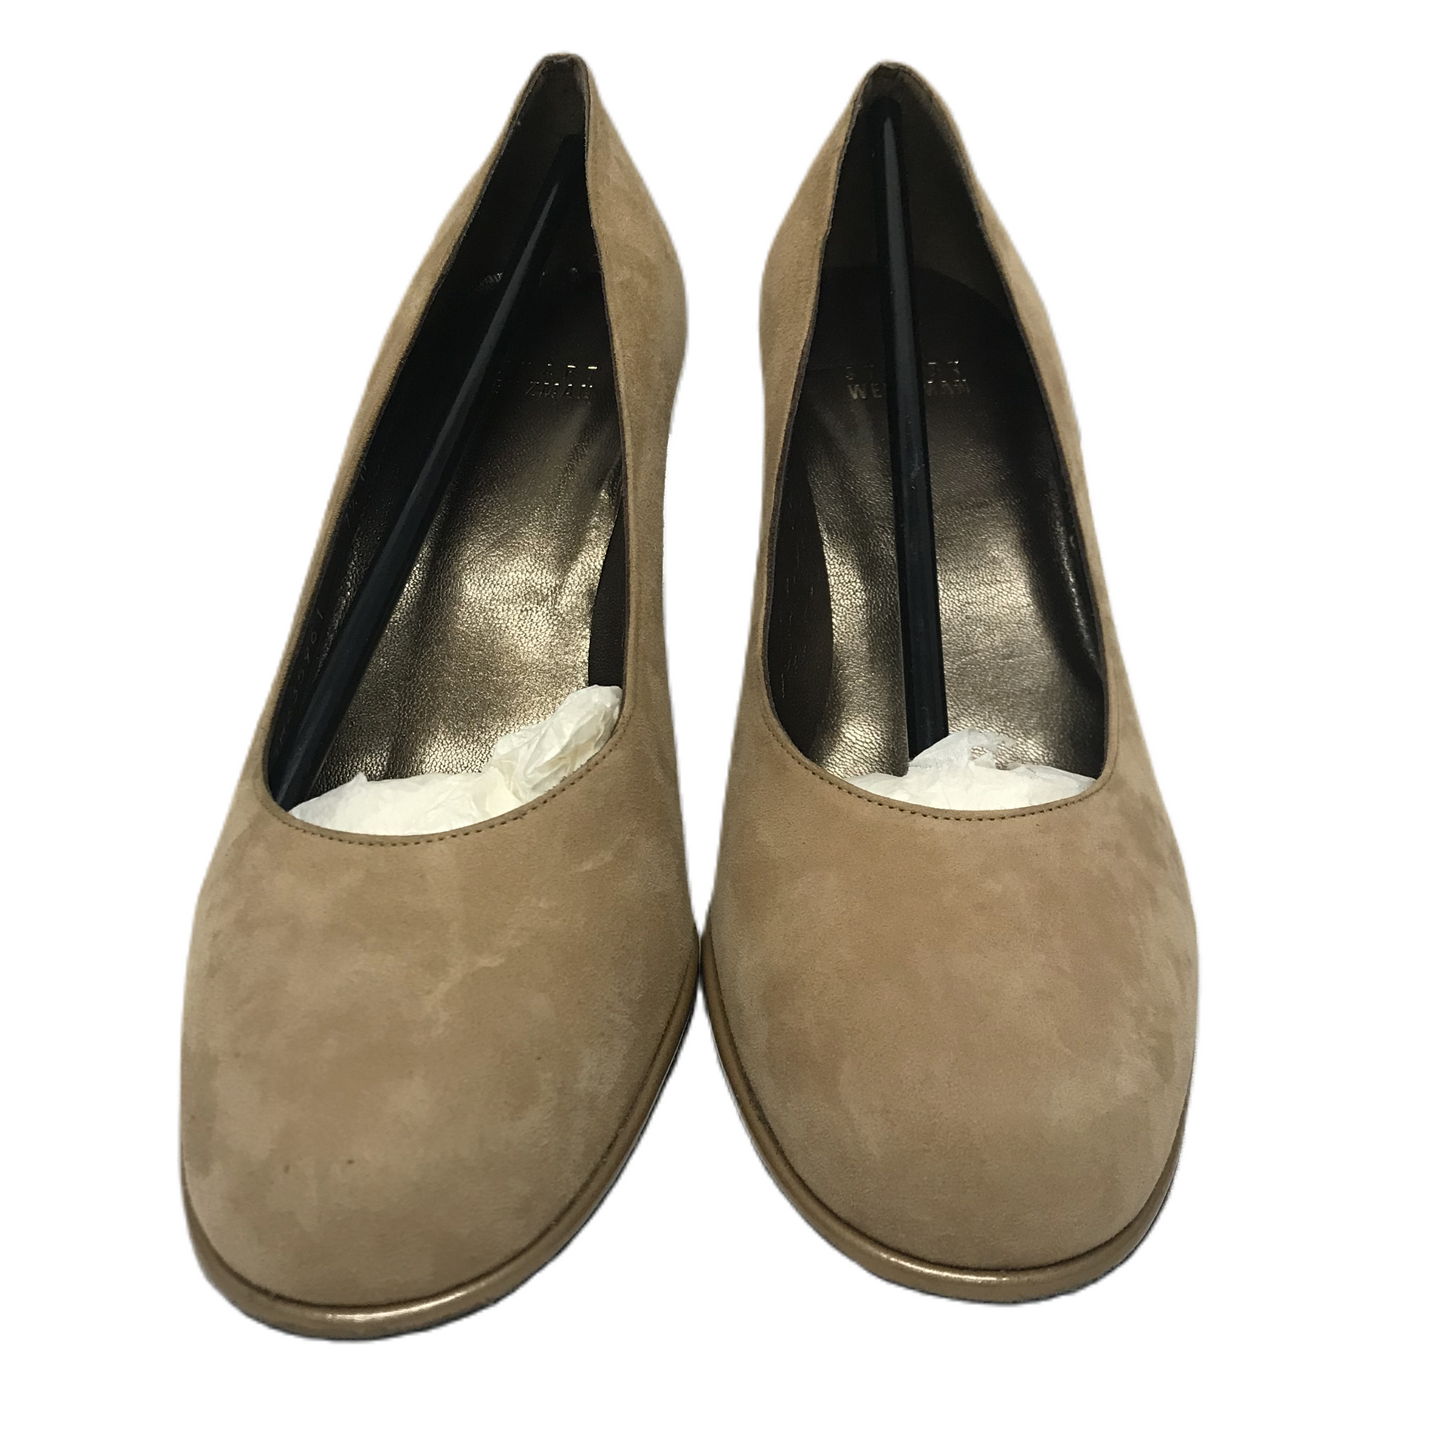 Tan Shoes Heels Stiletto By Stuart Weitzman, Size: 7.5